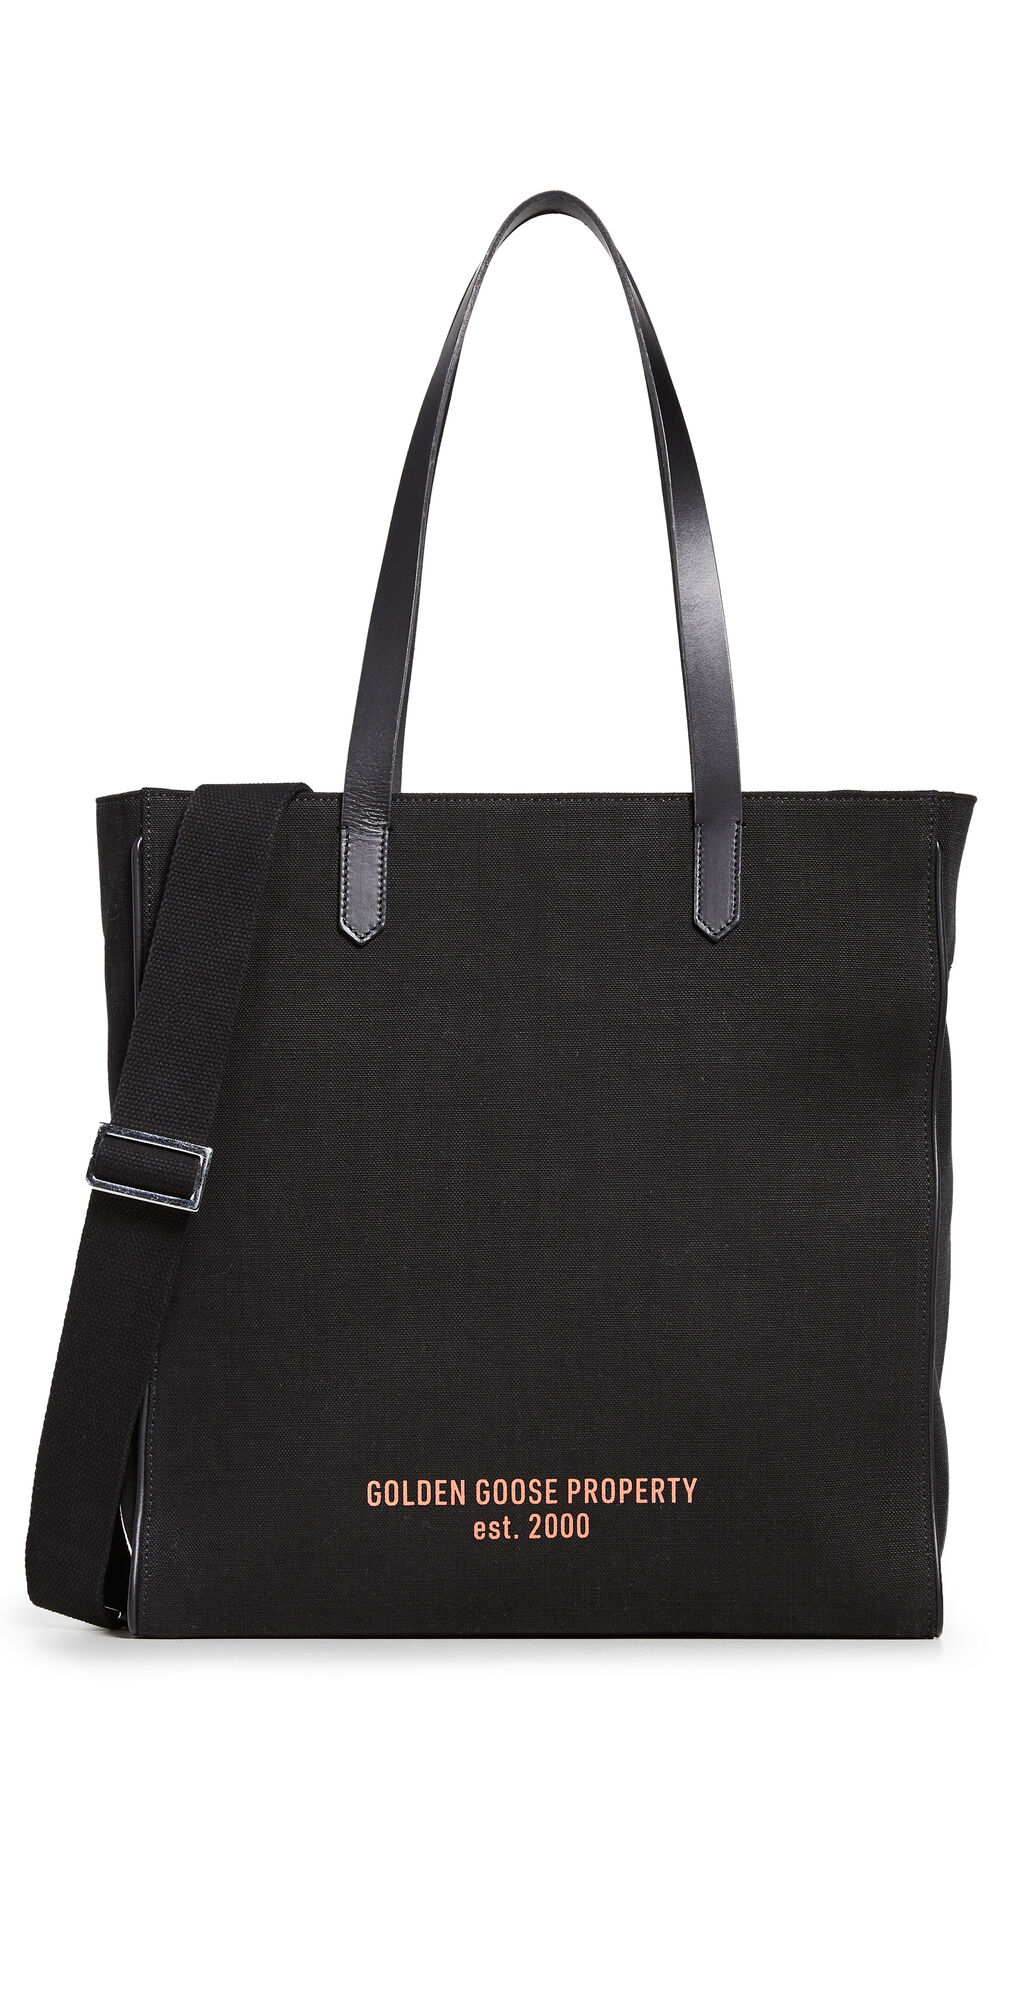 Golden Goose N/S California Bag Golden Goose Property Black One Size  Black  size:One Size